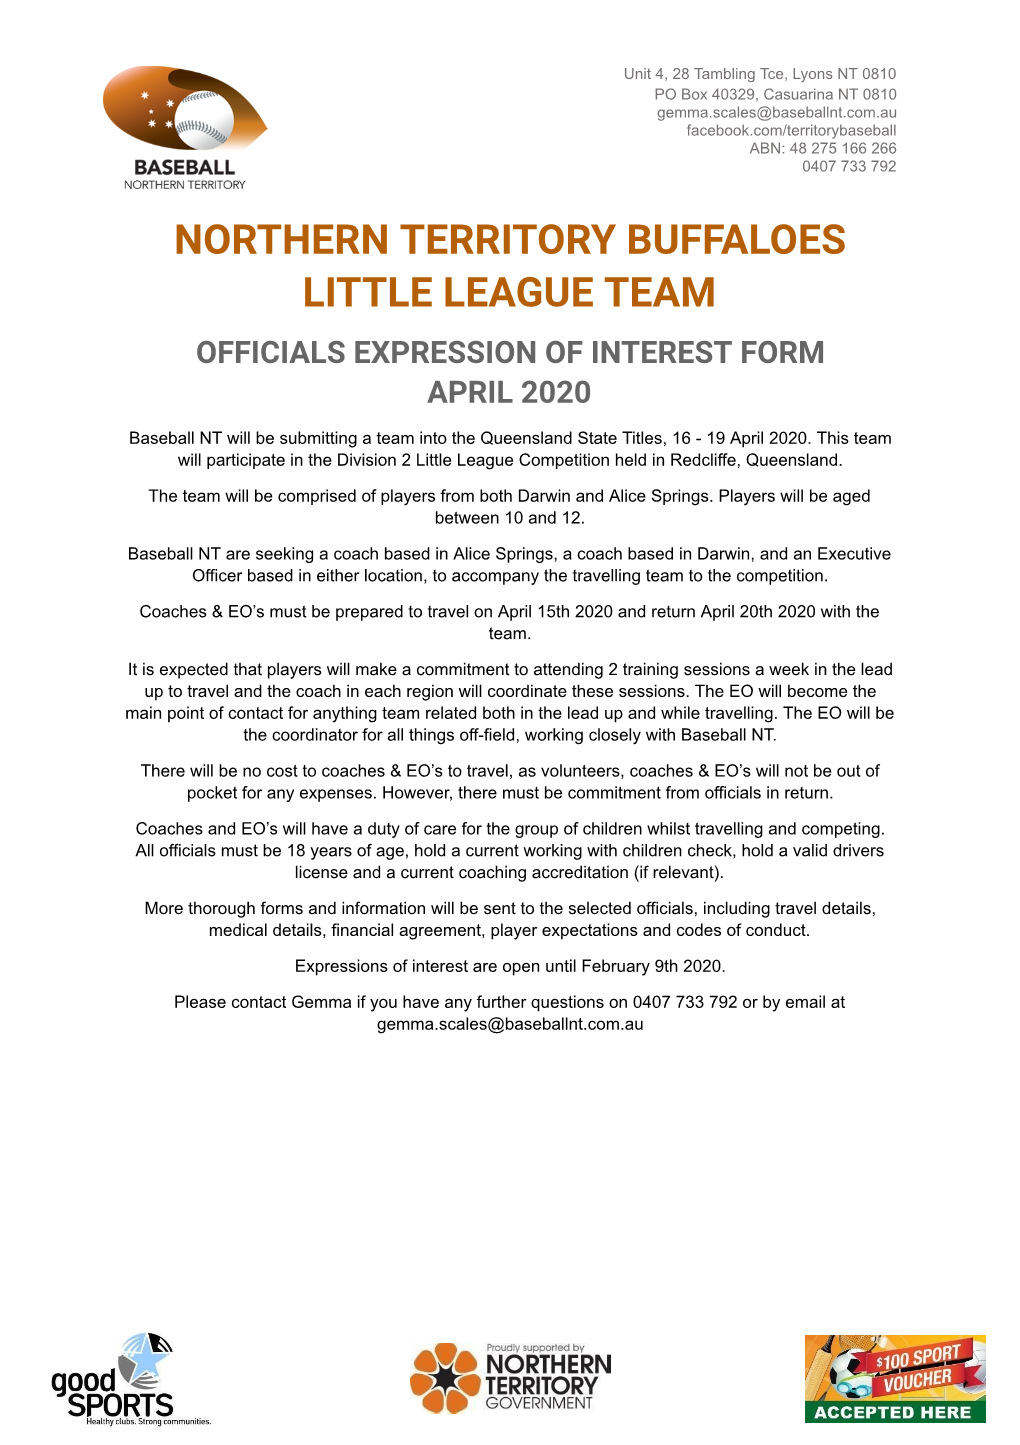 Northern Territory Buffaloes Little League Team